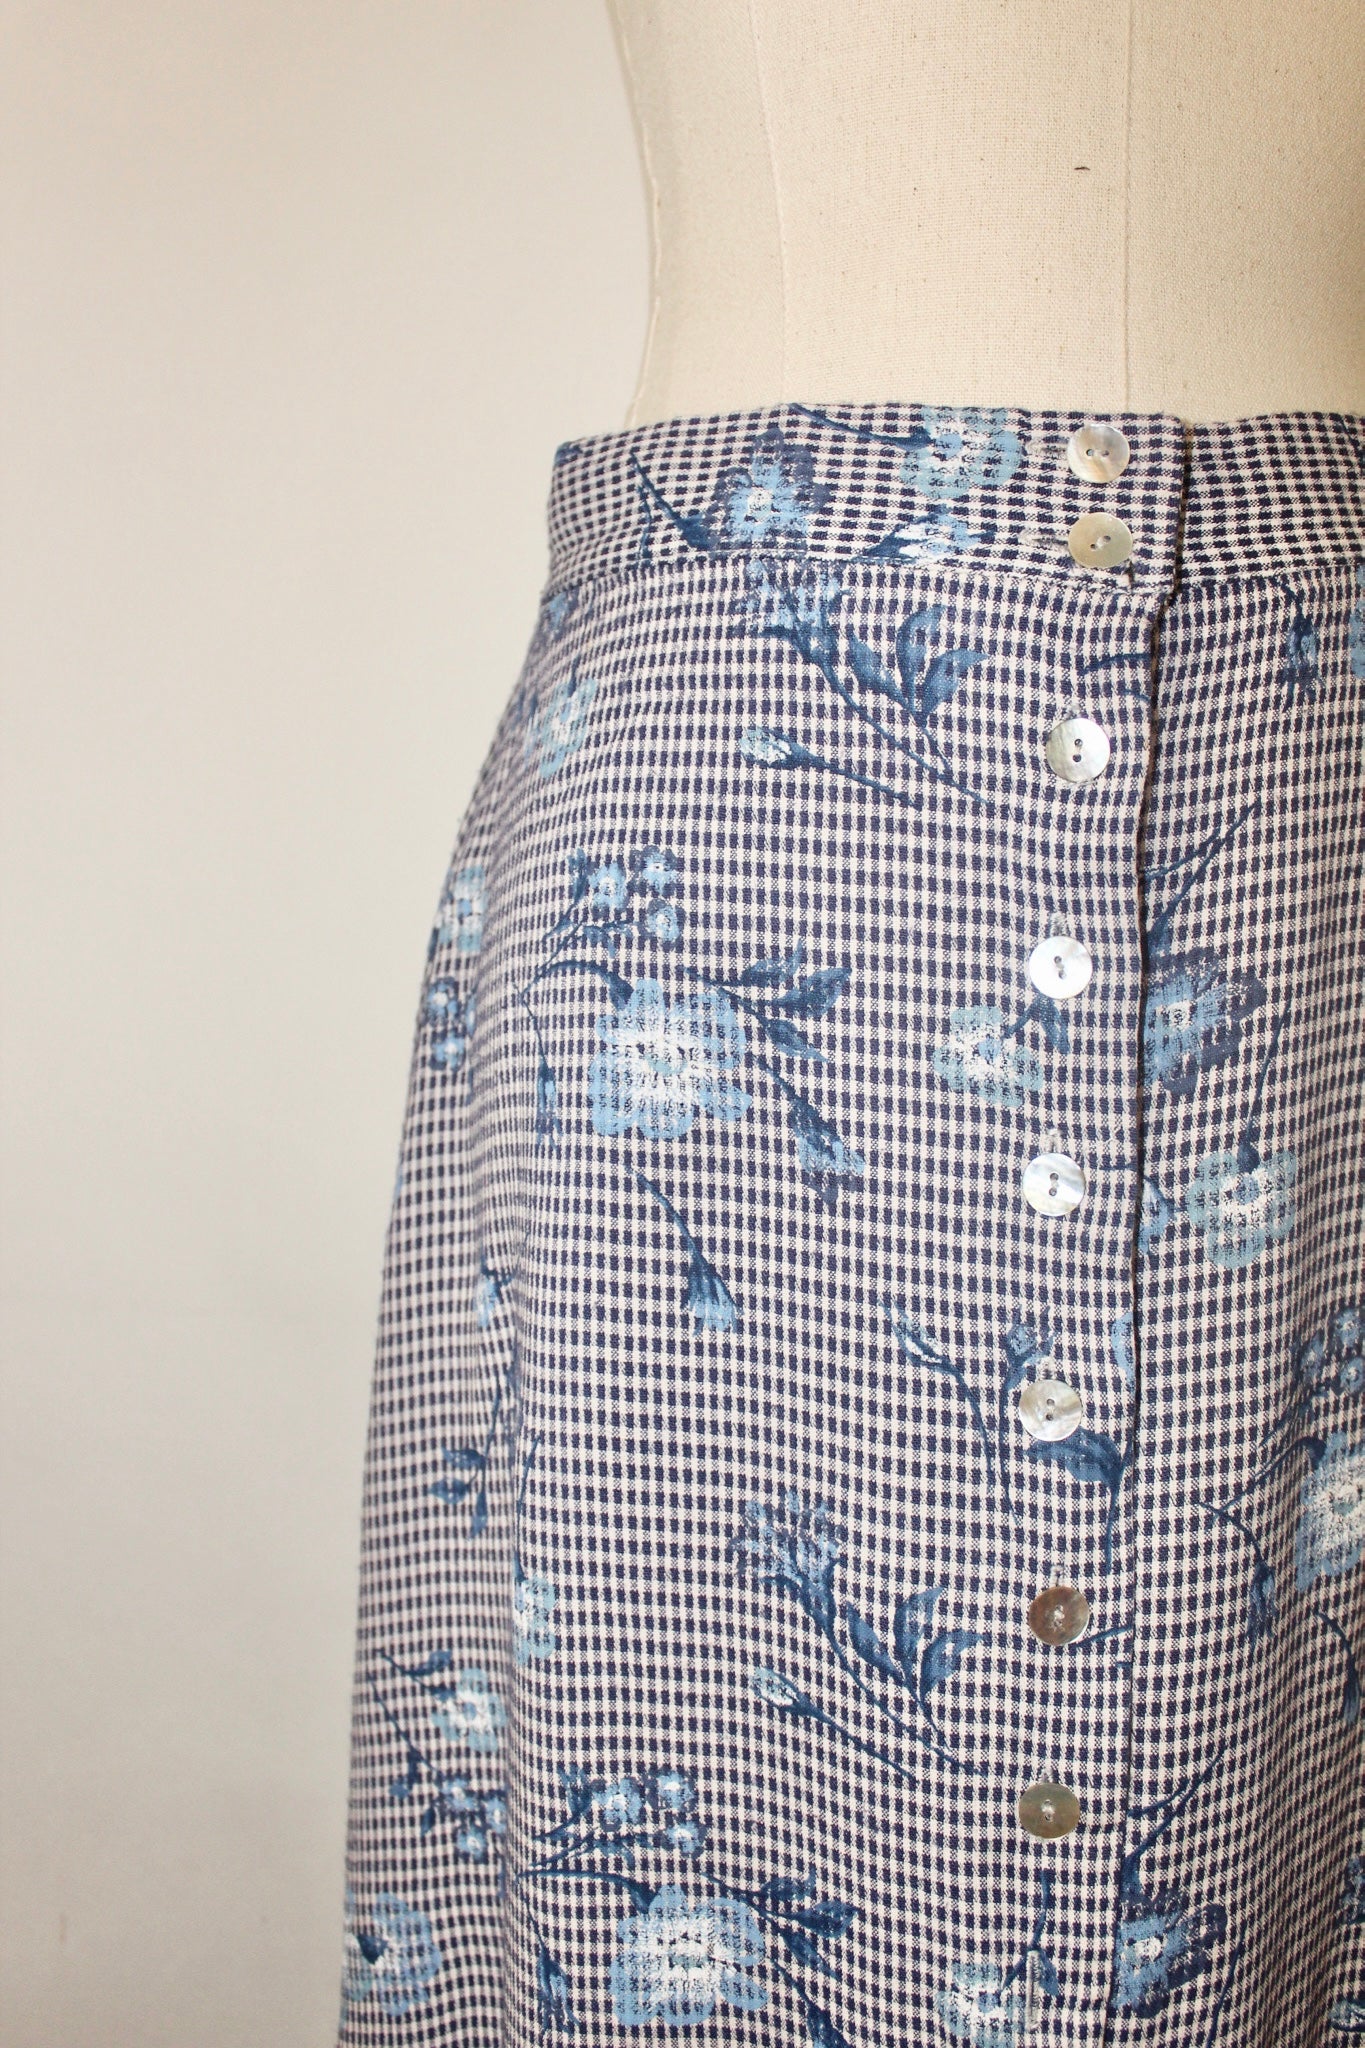 Vintage 90s Gingham Floral Button Up Skirt (25-26")